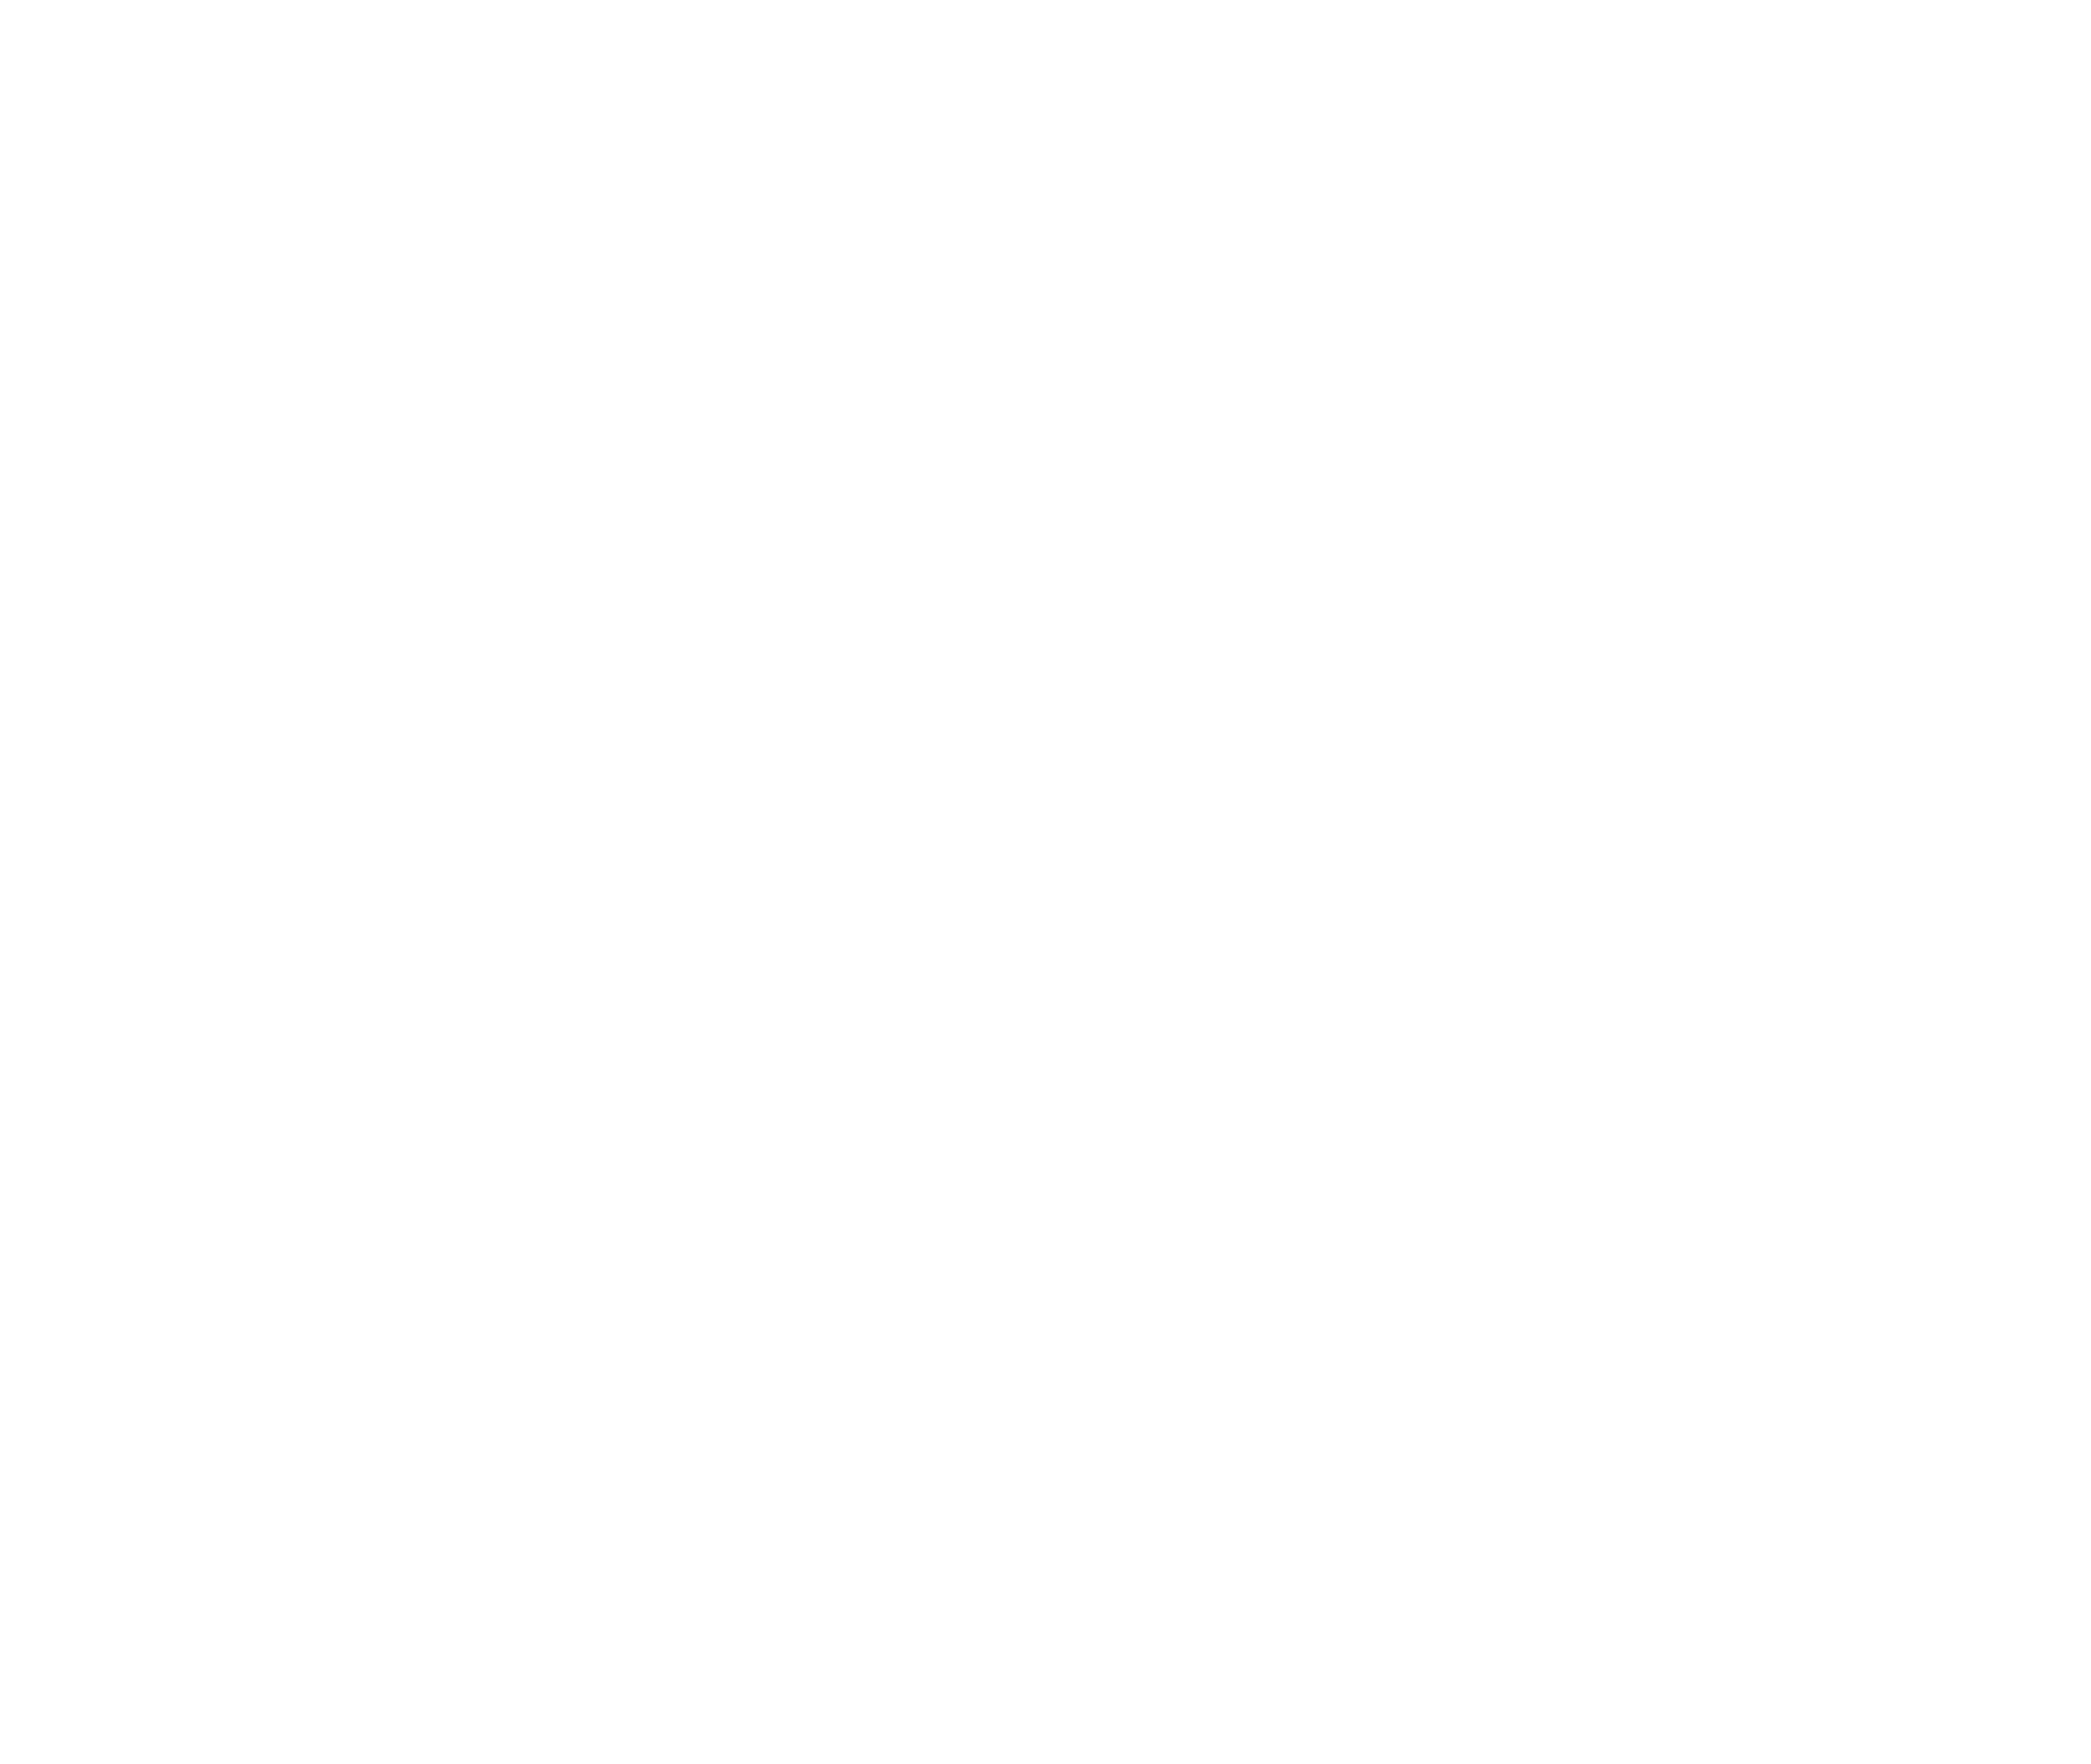 Remote Sensing / Renewable Energies